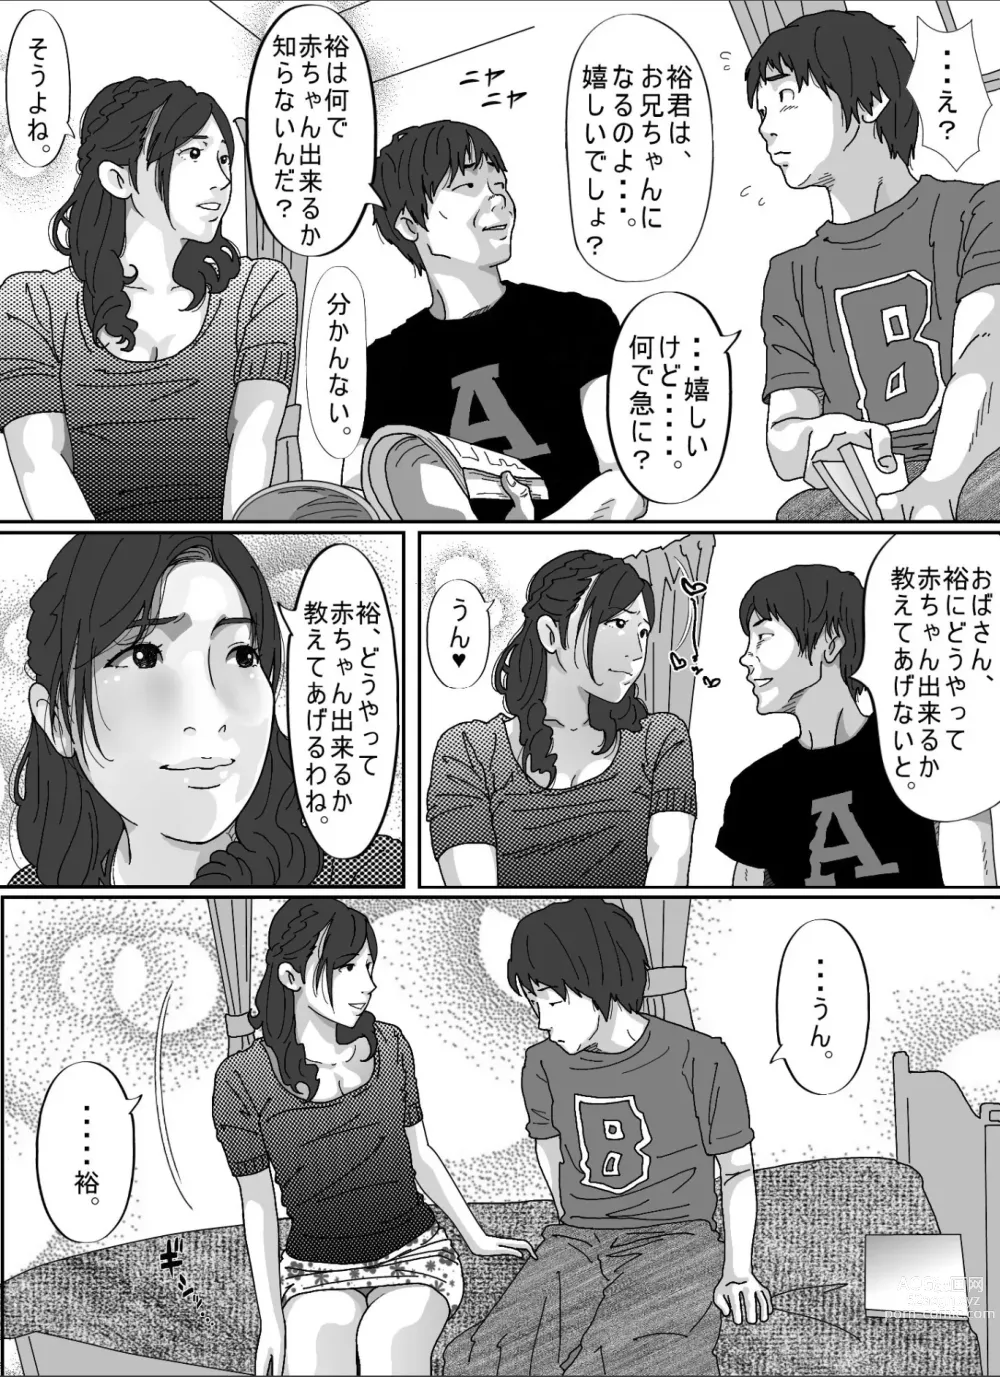 Page 82 of doujinshi Tomodachi no Okaa-san.